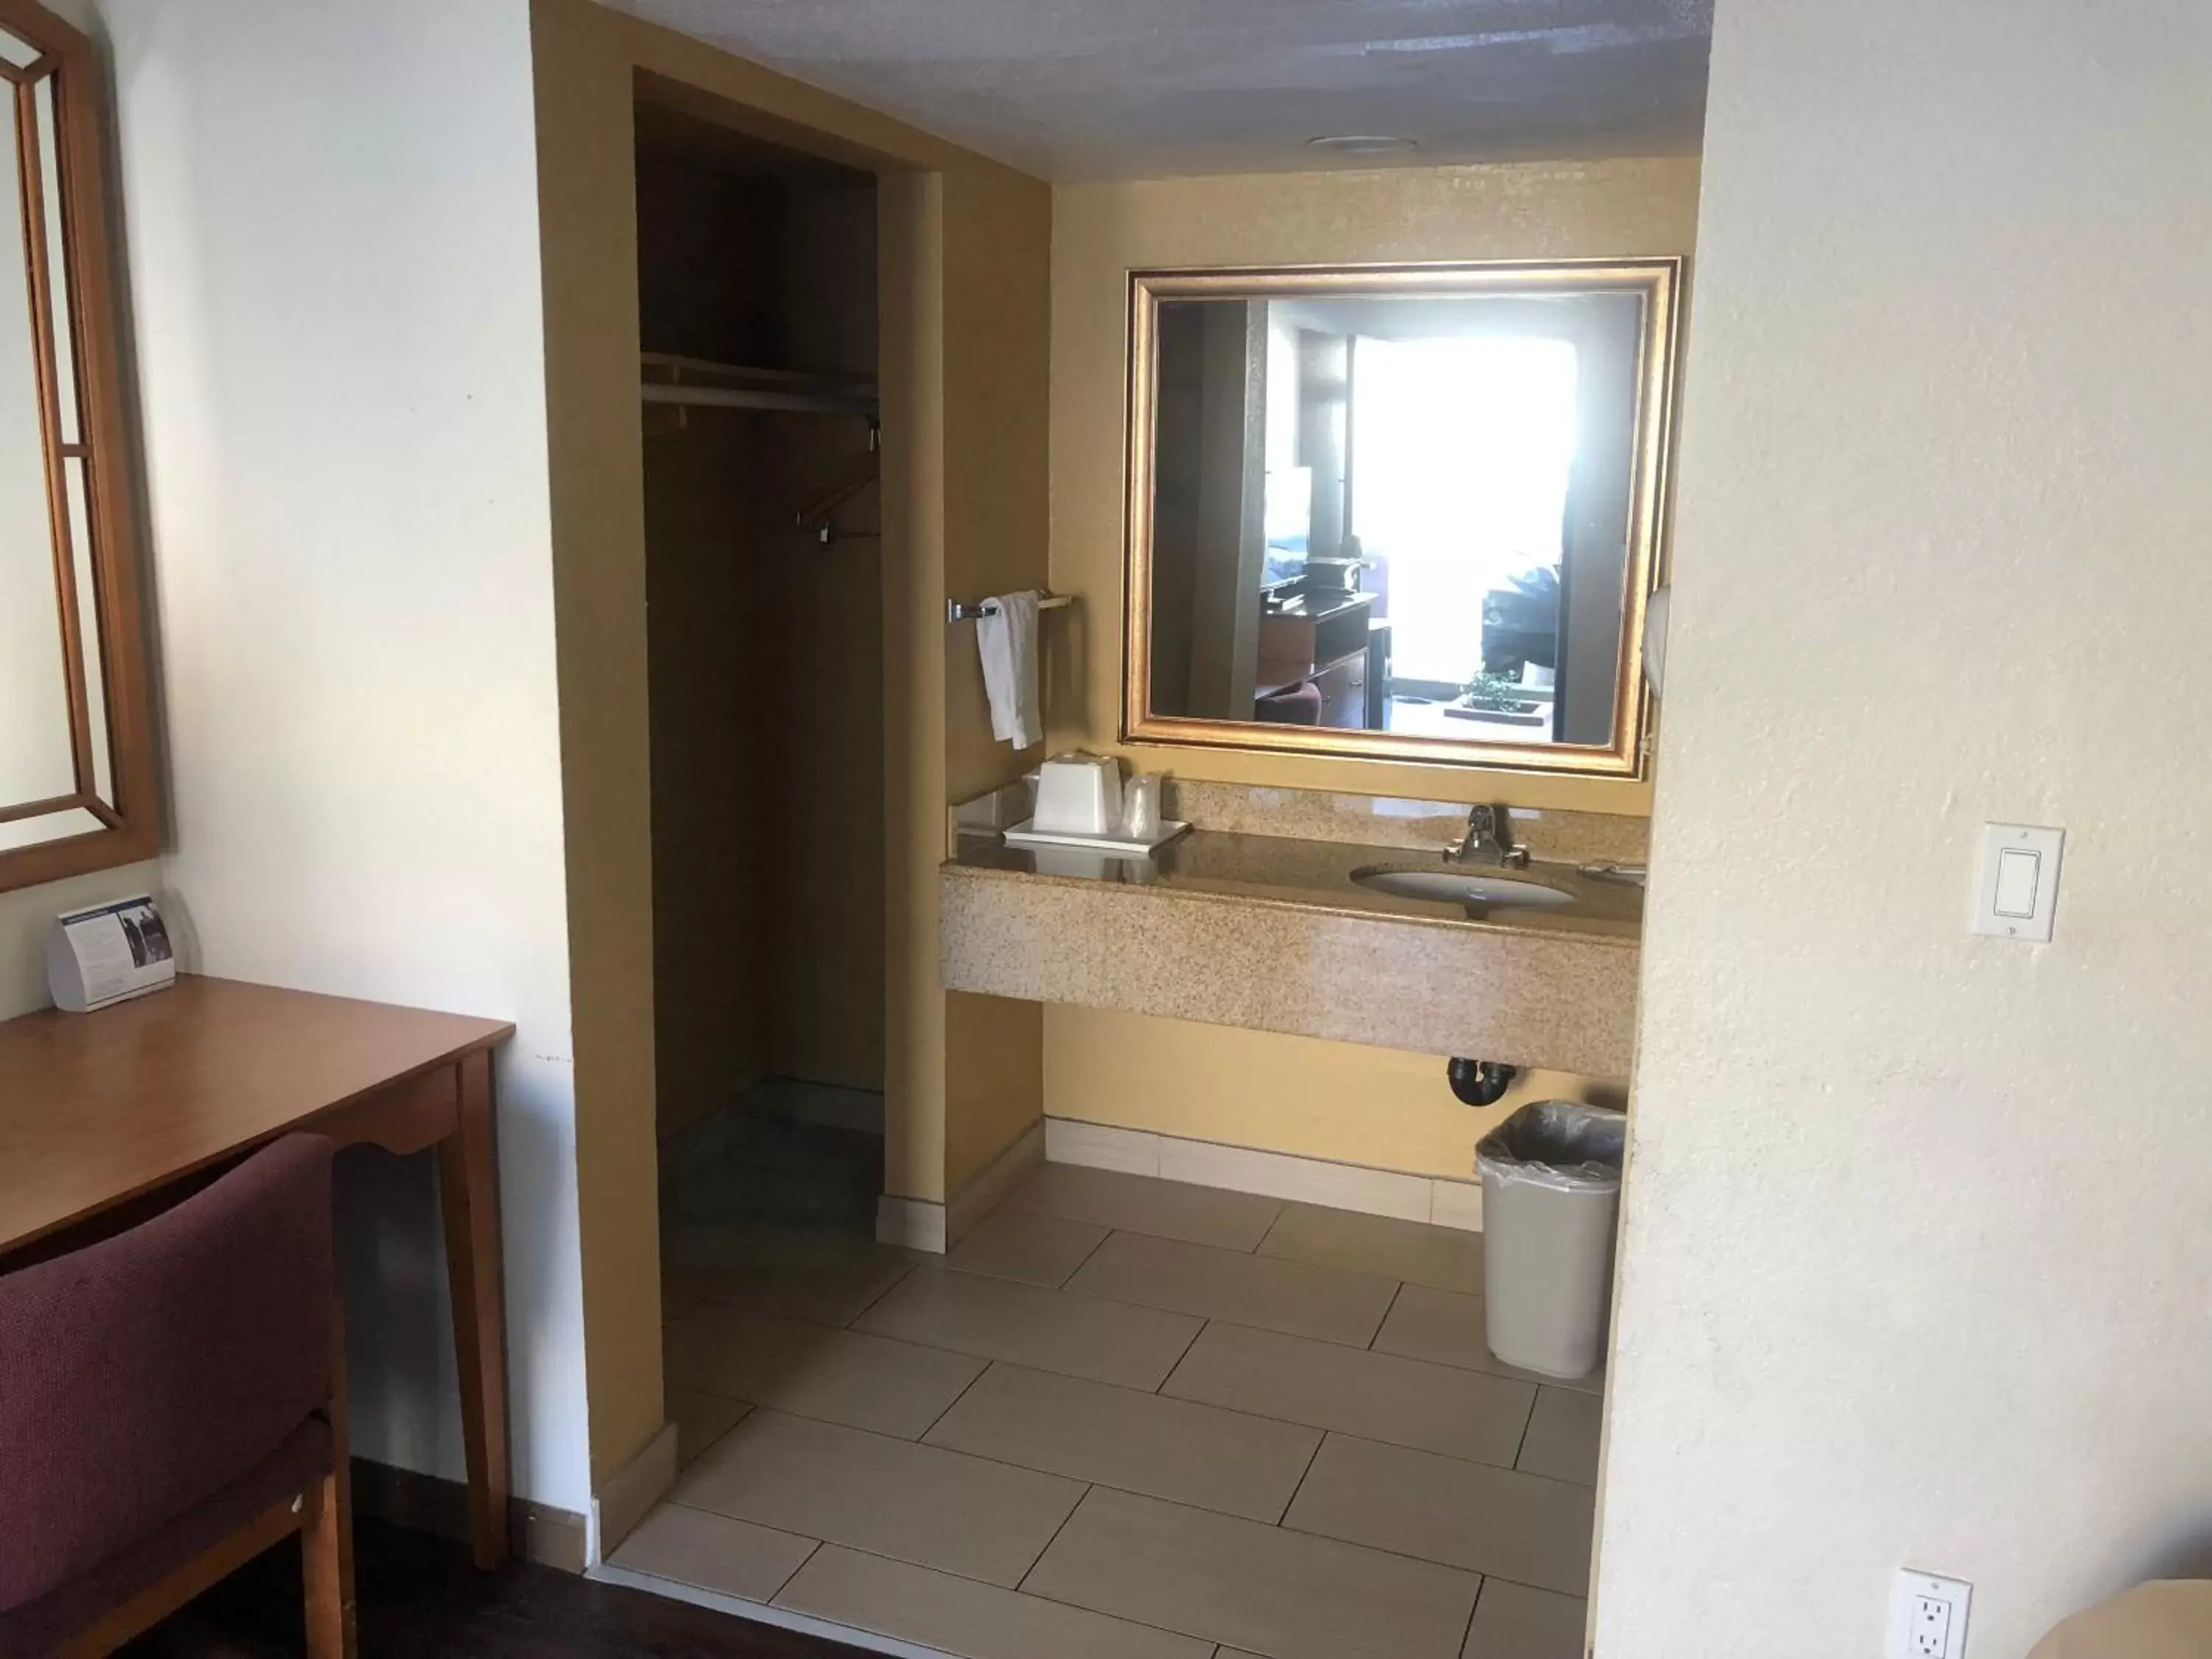 Area and facilities, Bathroom in Northgate Motel